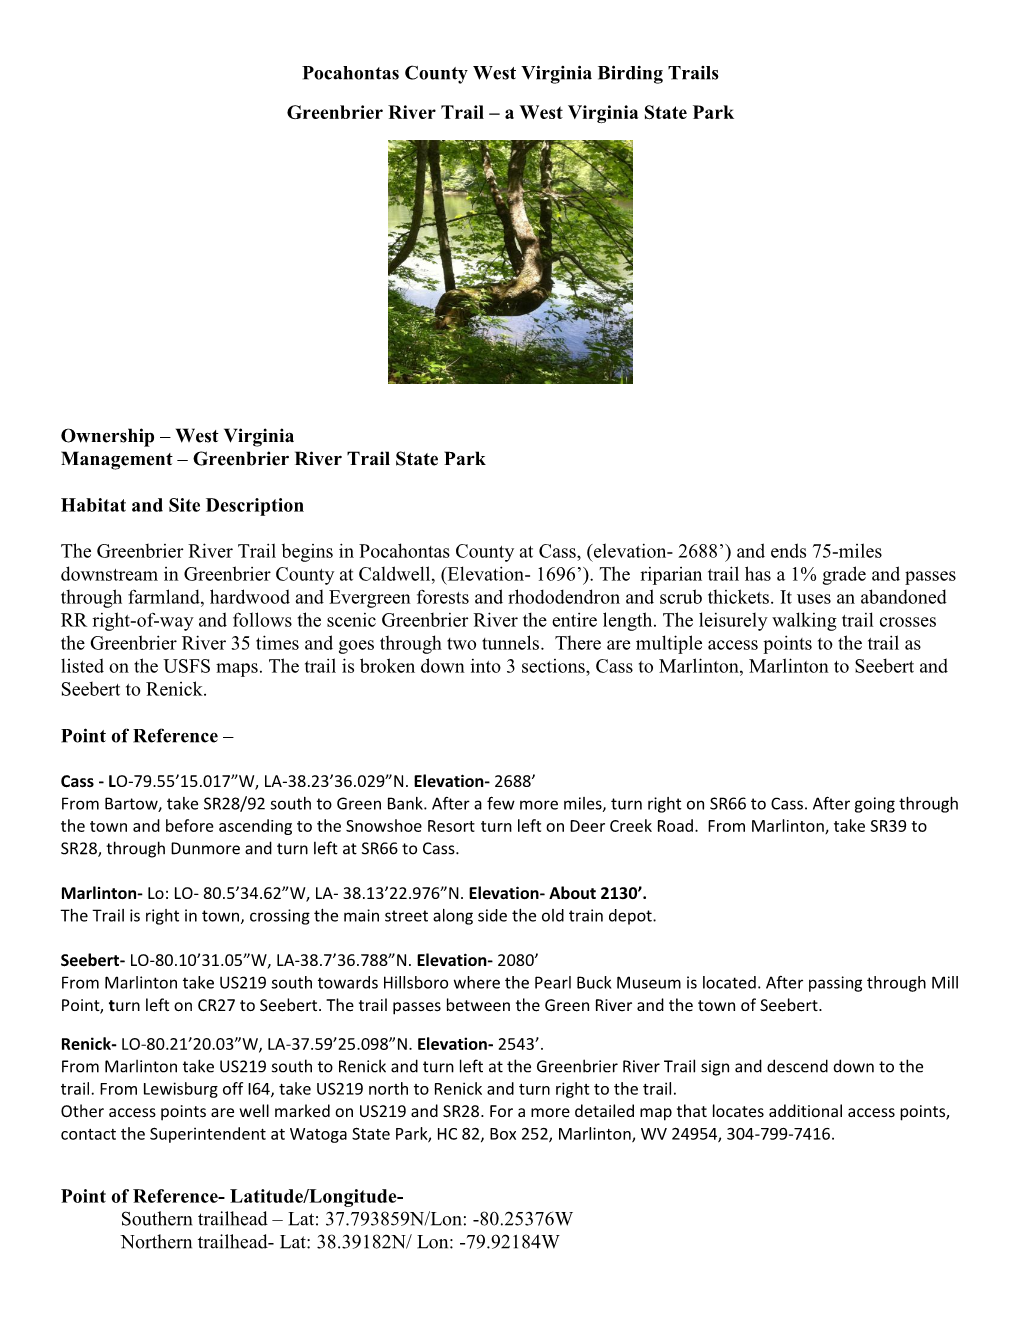 Pocahontas County West Virginia Birding Trails Greenbrier River Trail – a West Virginia State Park